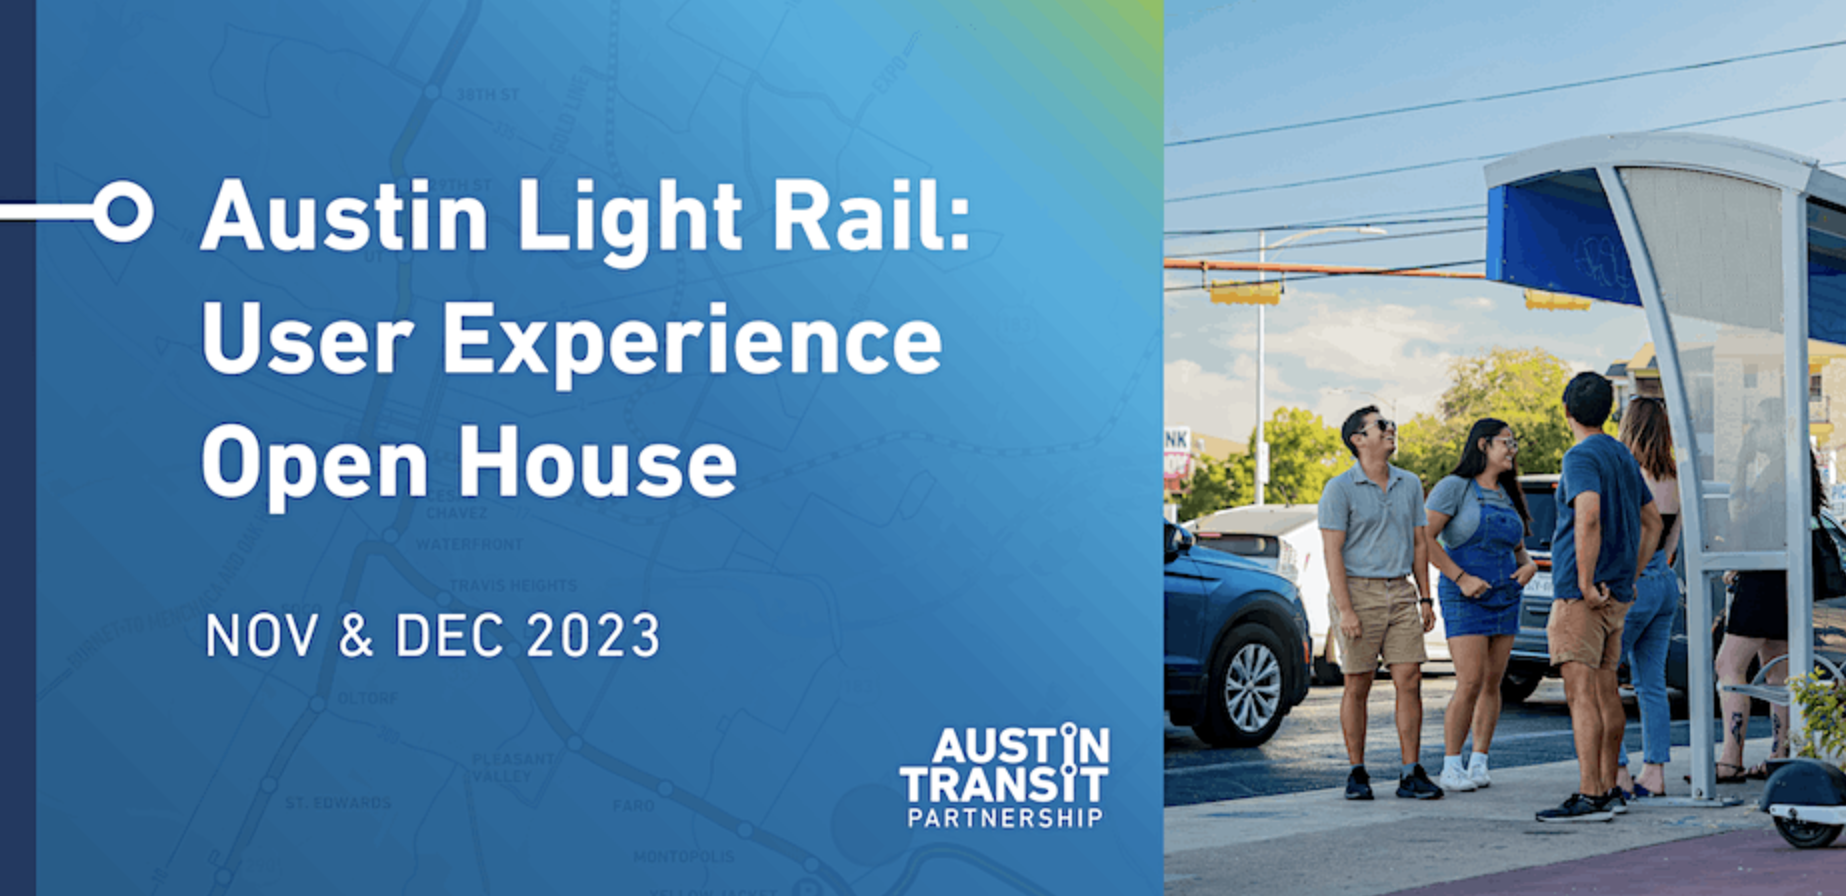 Austin Light Rail User Experience Open House